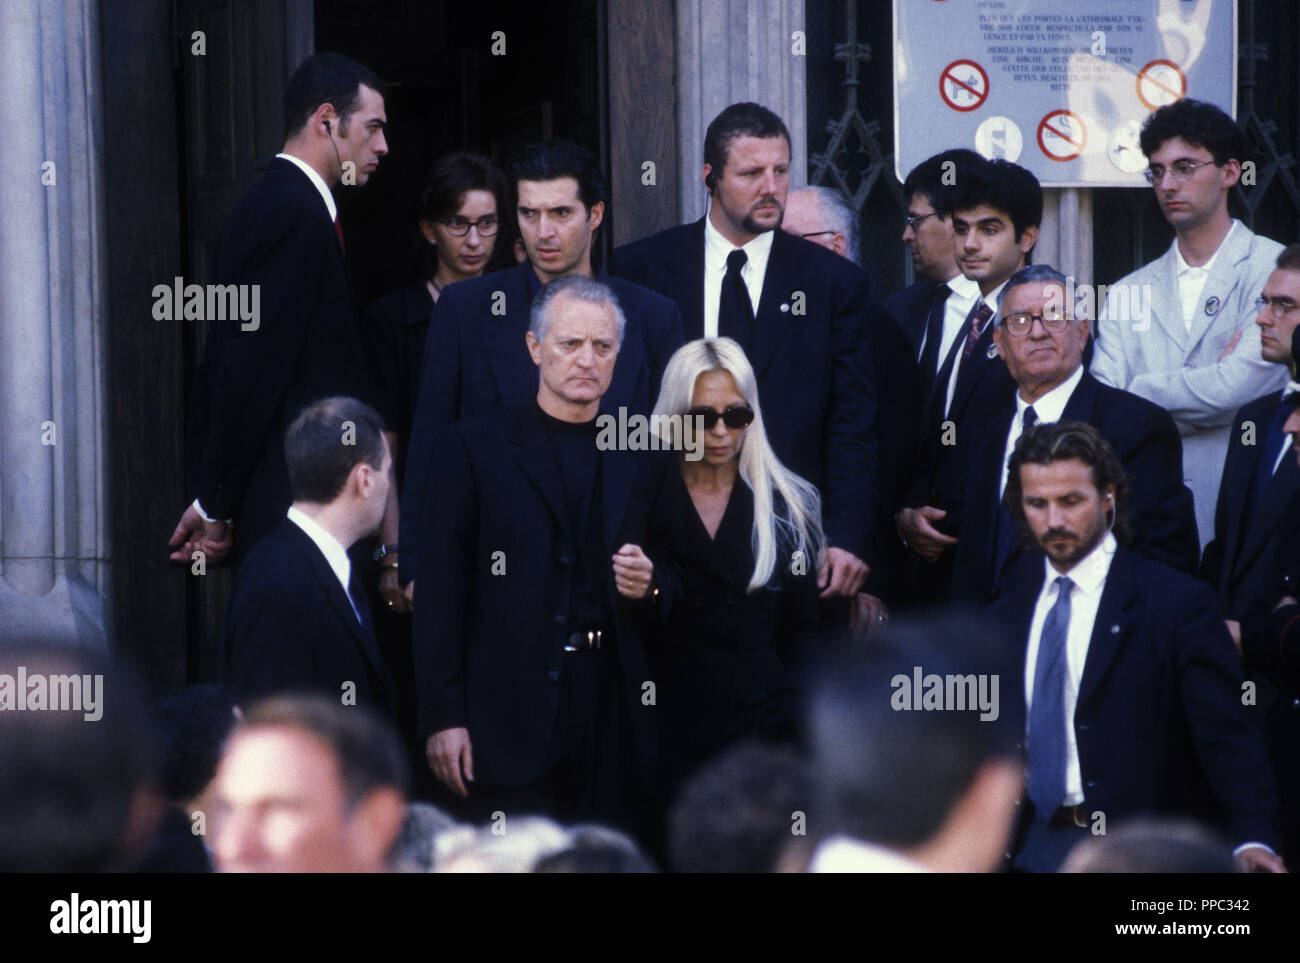 Santo E Donatella Versace Funeral Of Gianni Versace 1997 Stock Photo - Alamy